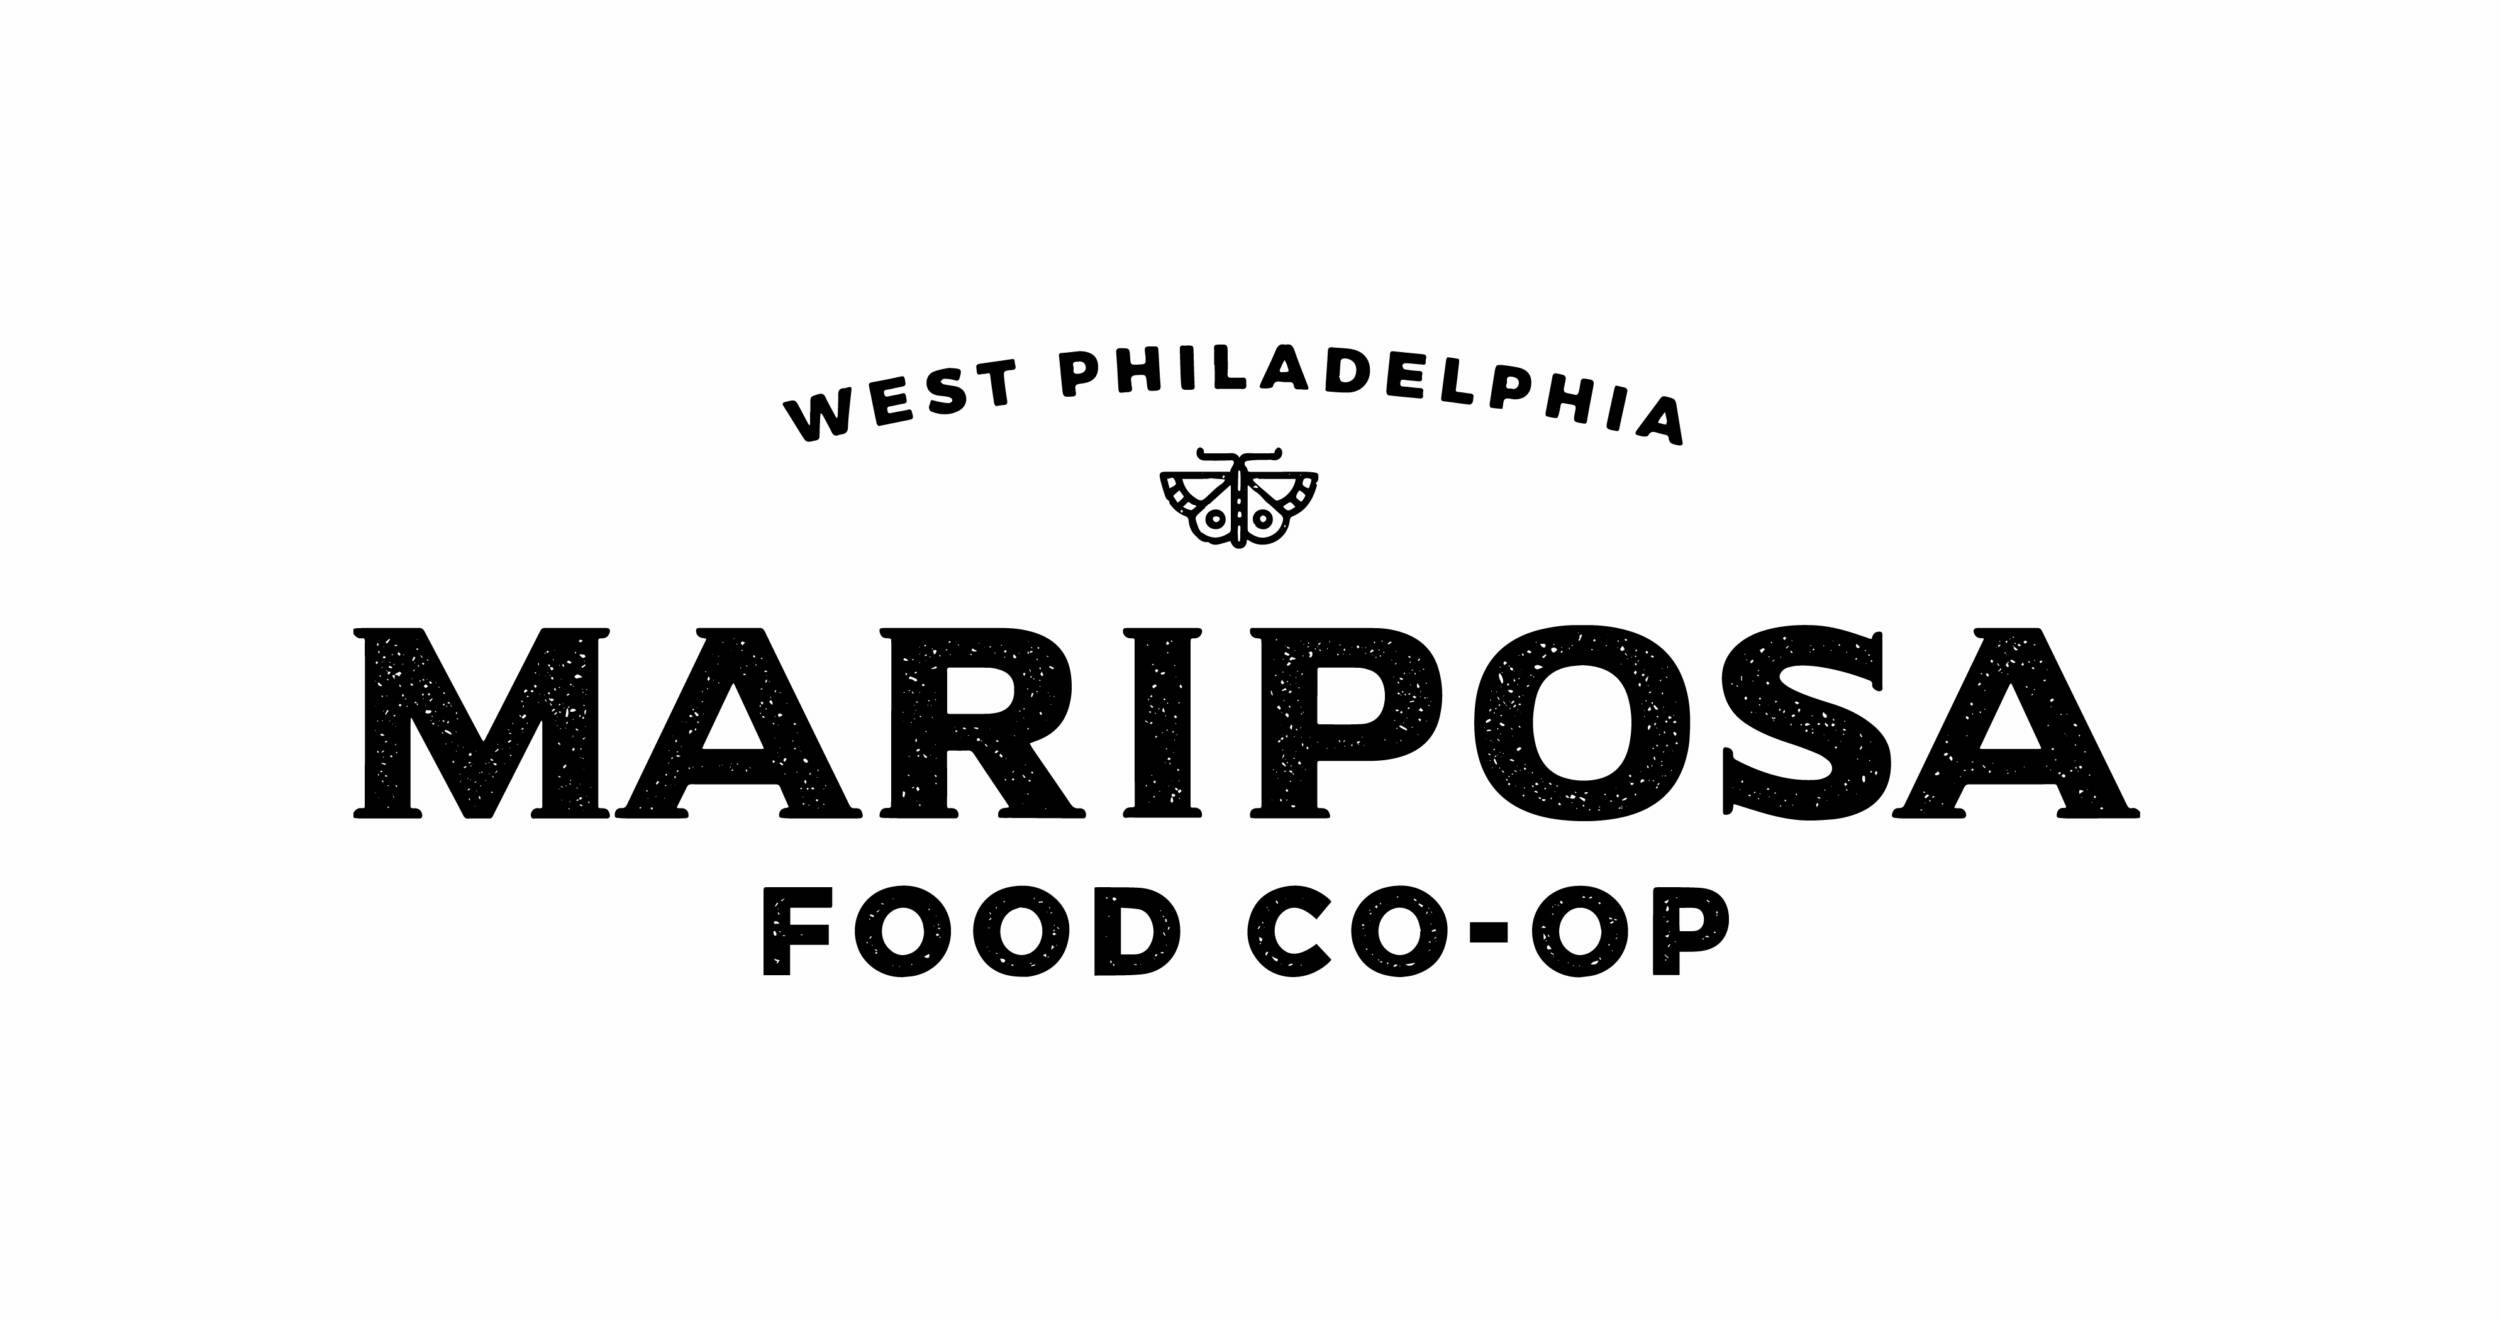 Mariposa Food Co-op